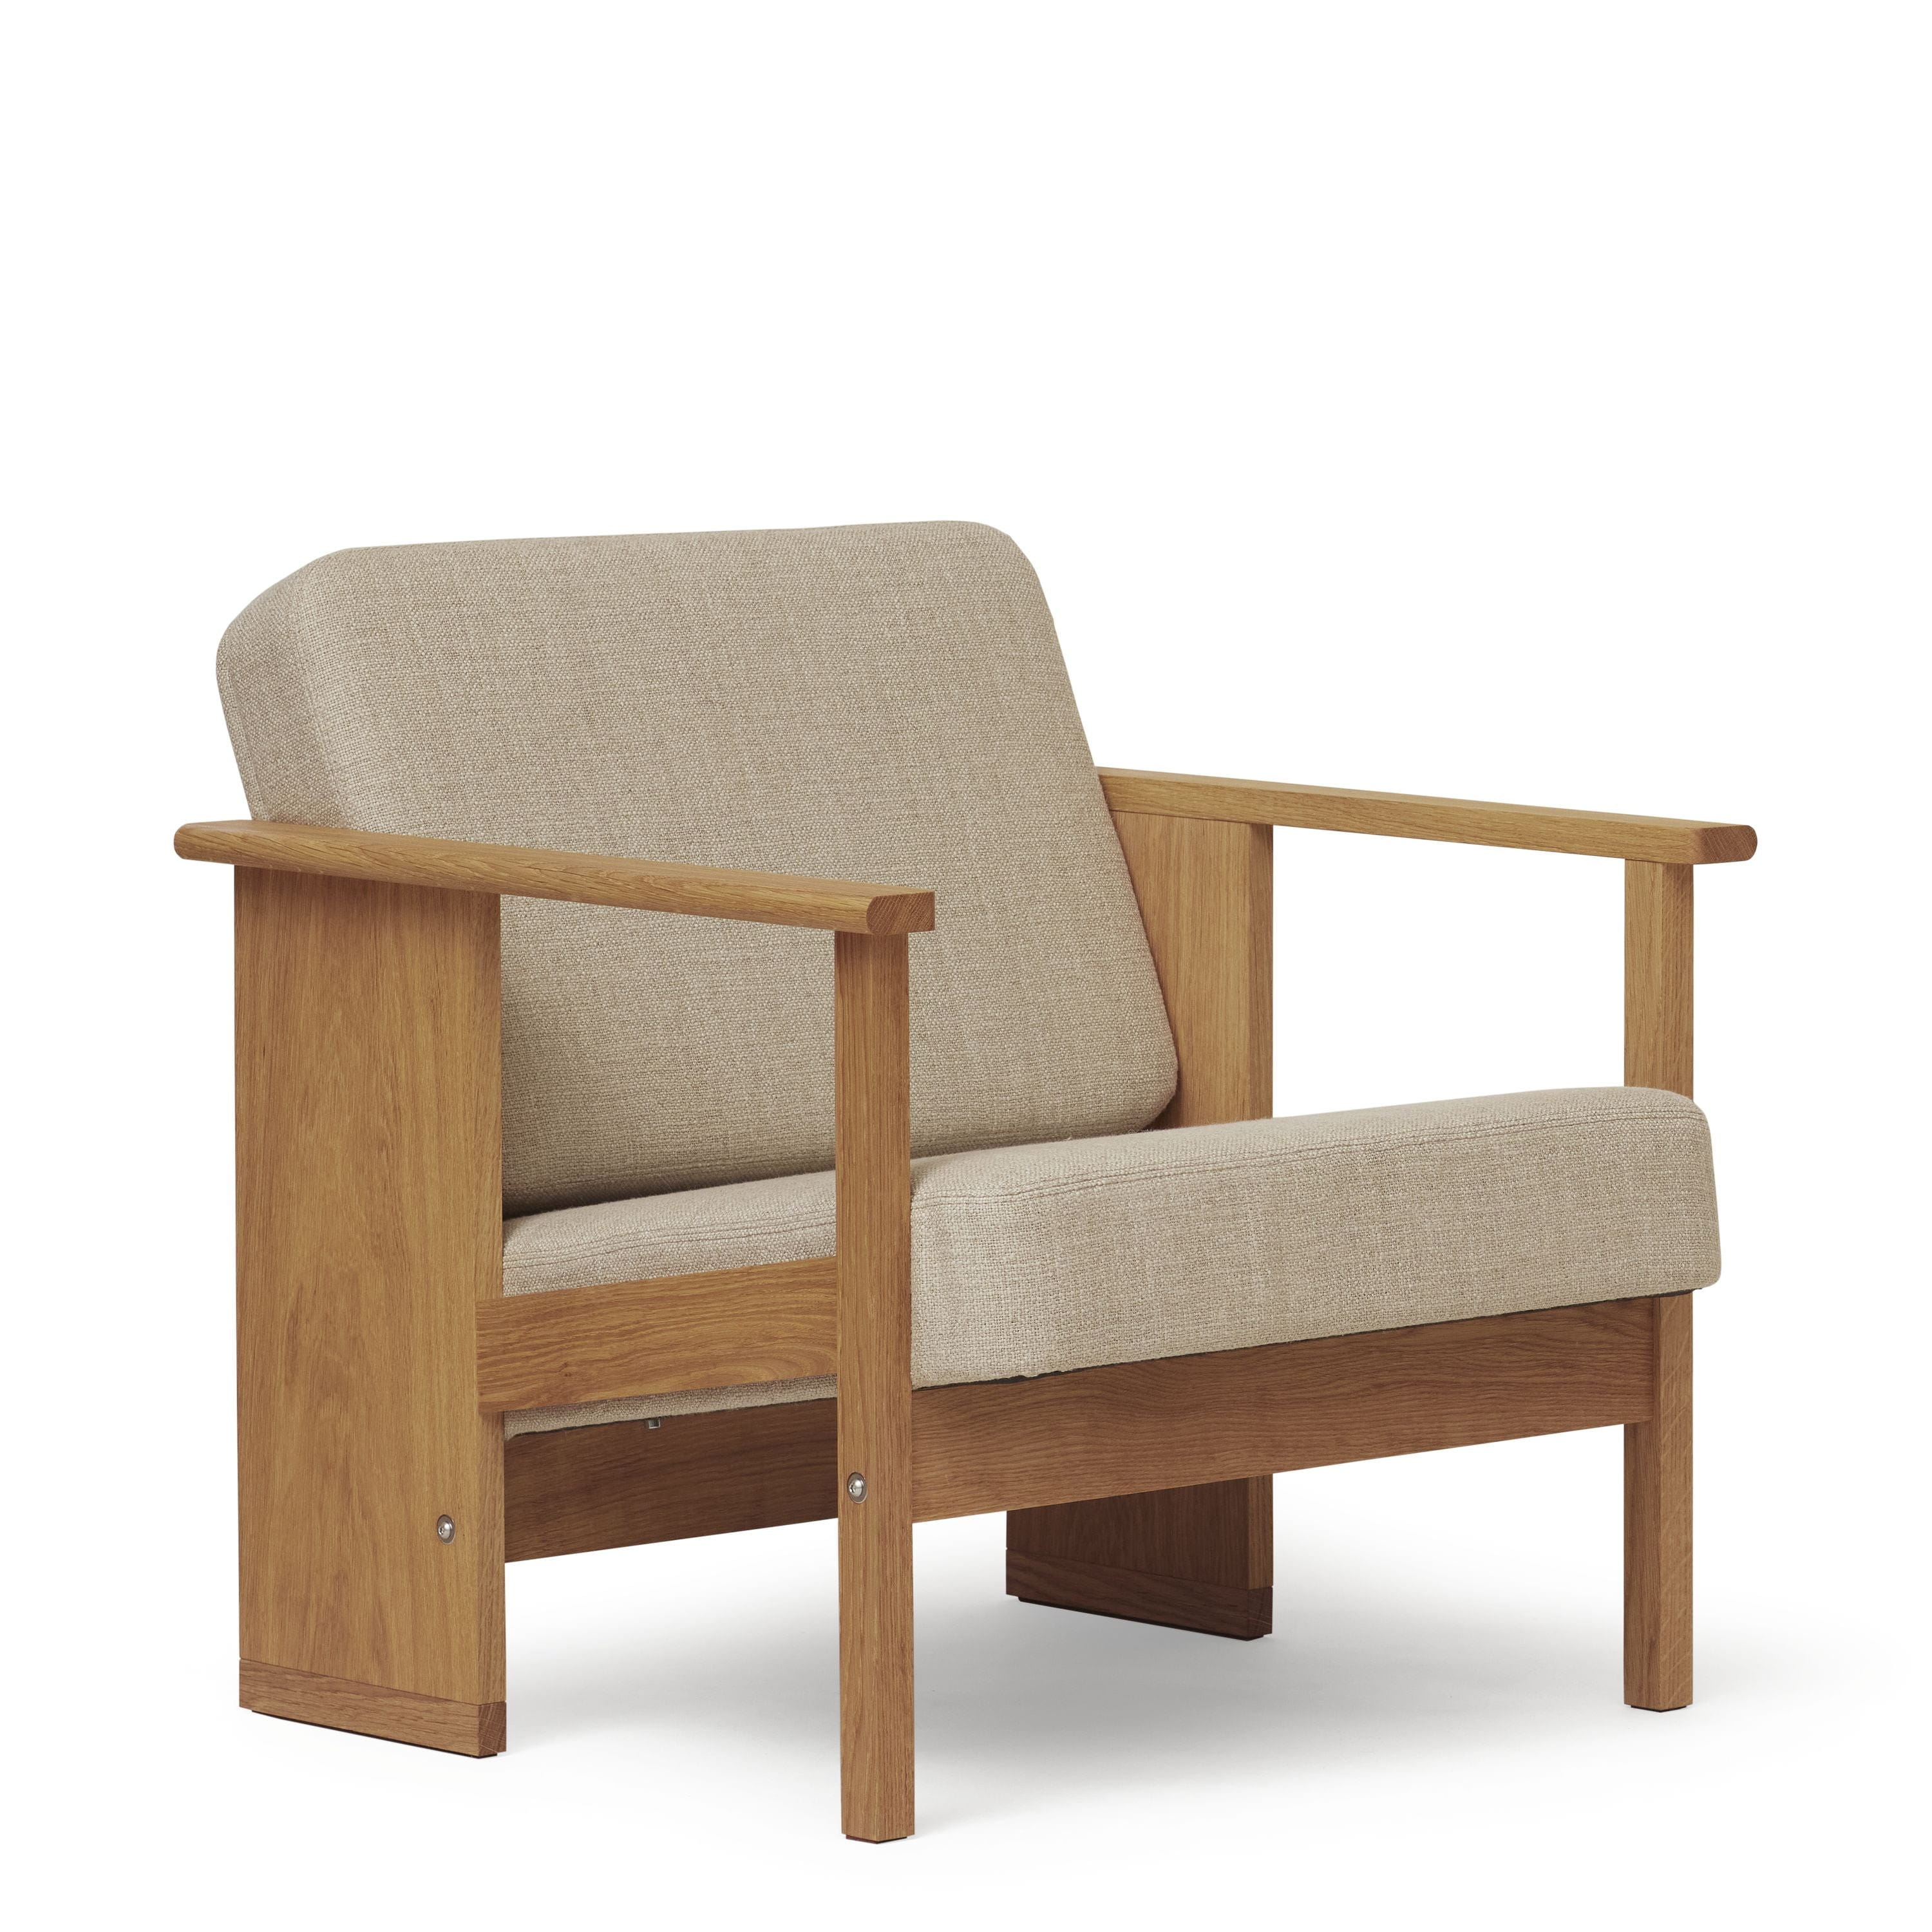 Form & Refine Block Lounge Chair. Ek